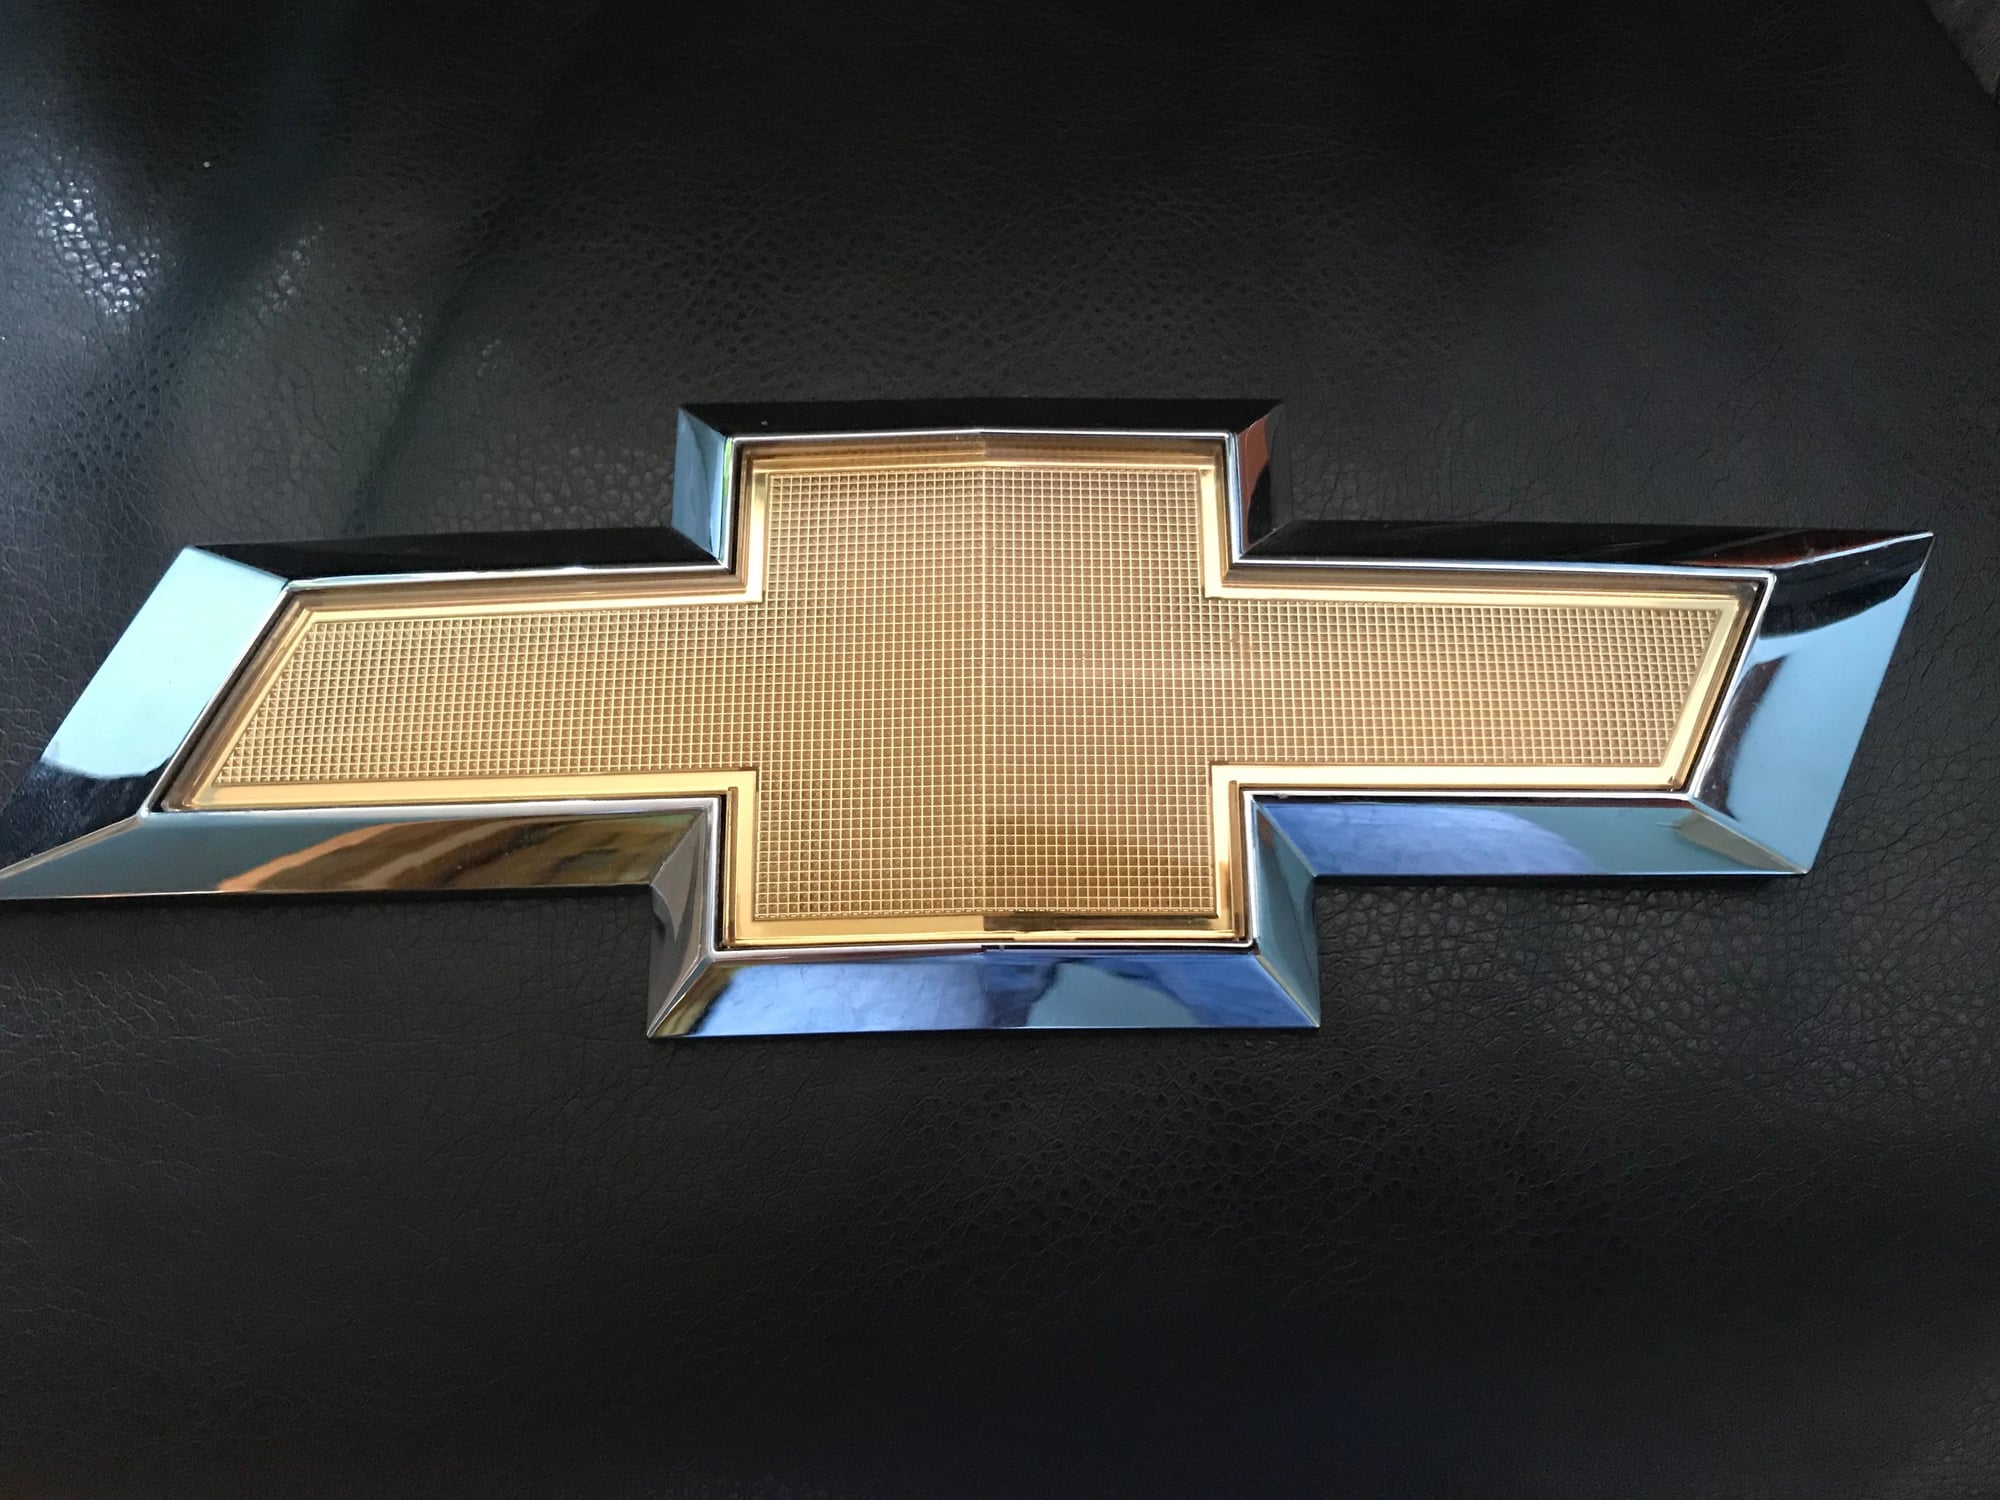  - Chevrolet Bow-Tie Emblems - Detroit, MI 48255, United States